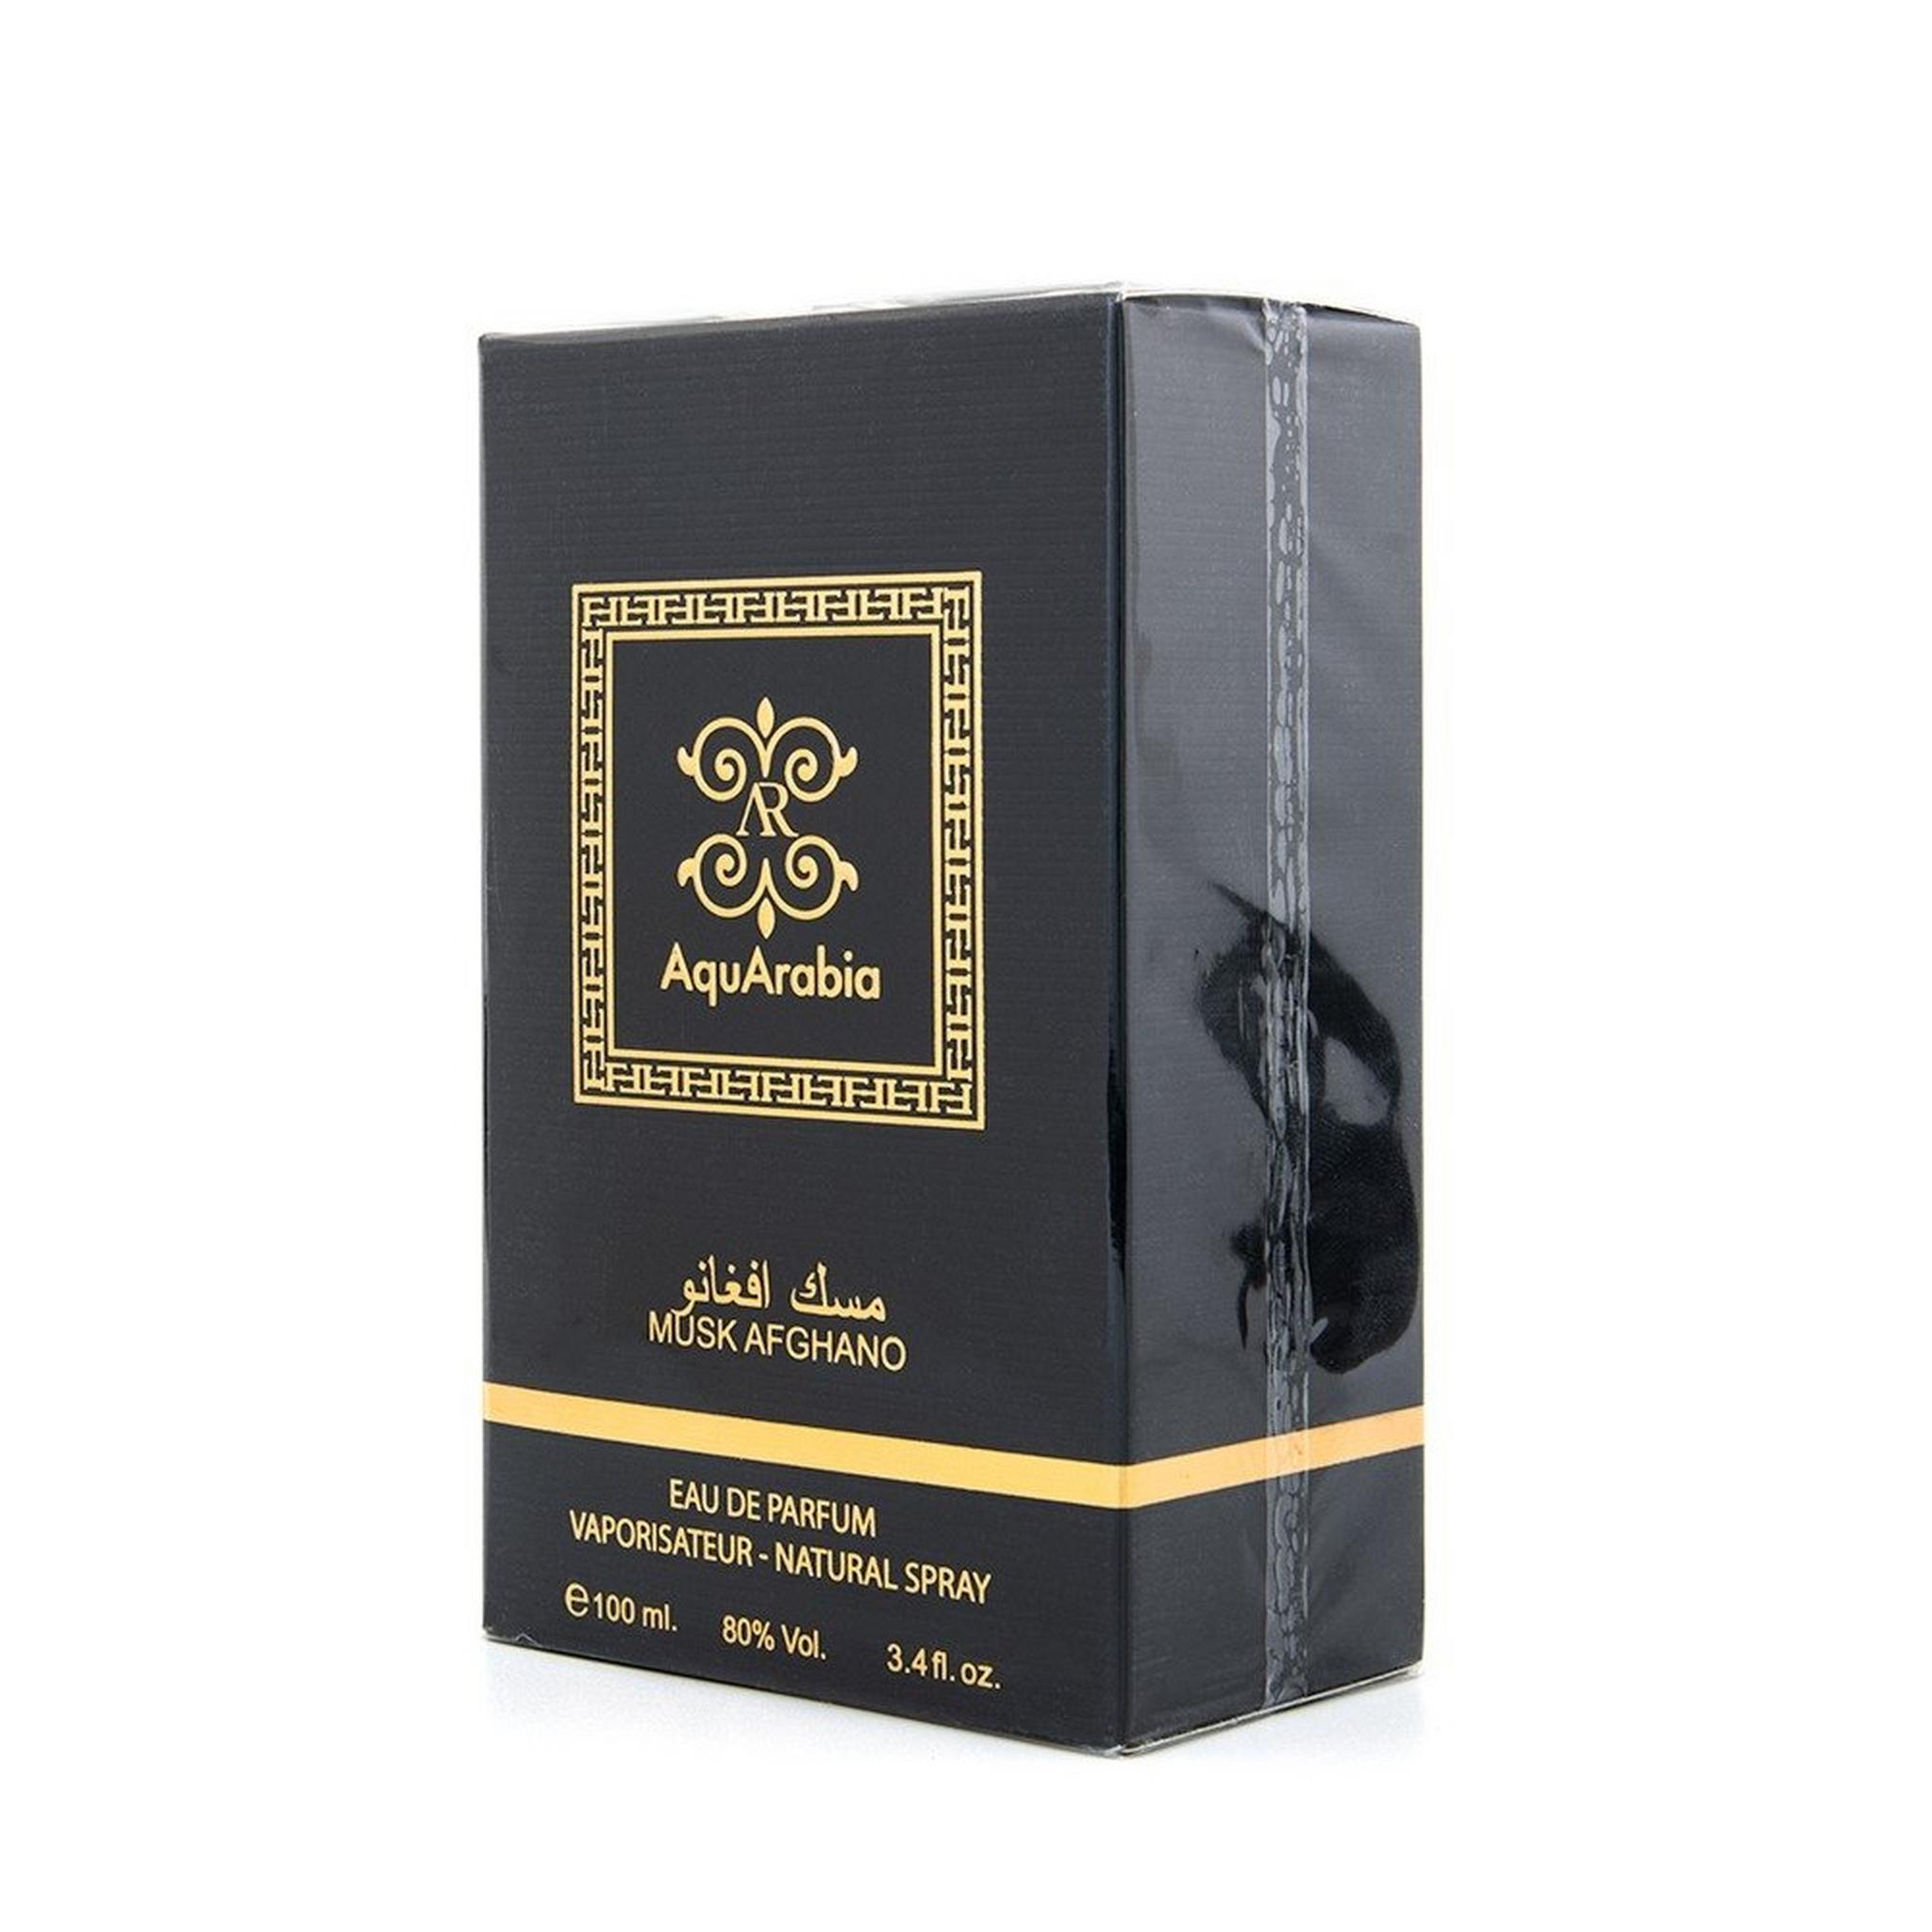 AQUA ARABIA Musk Afghano - Eau De Parfum 100 ml in Kuwait | Buy Online ...